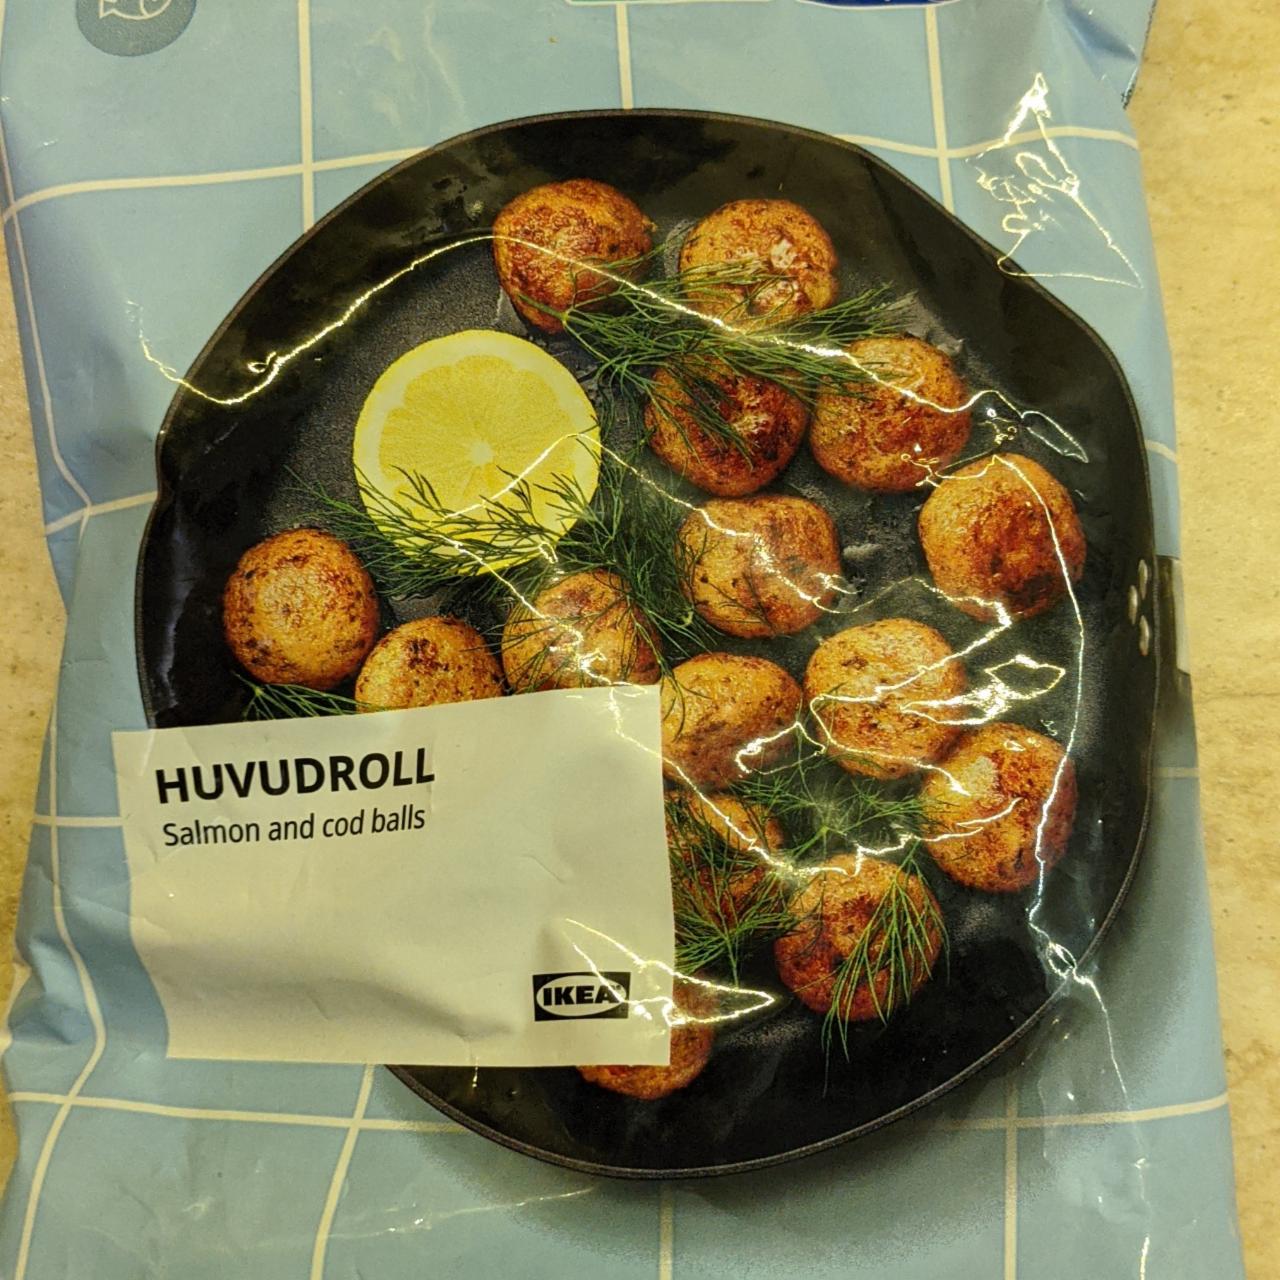 Fotografie - Huvudroll Salmon and cod balls Ikea